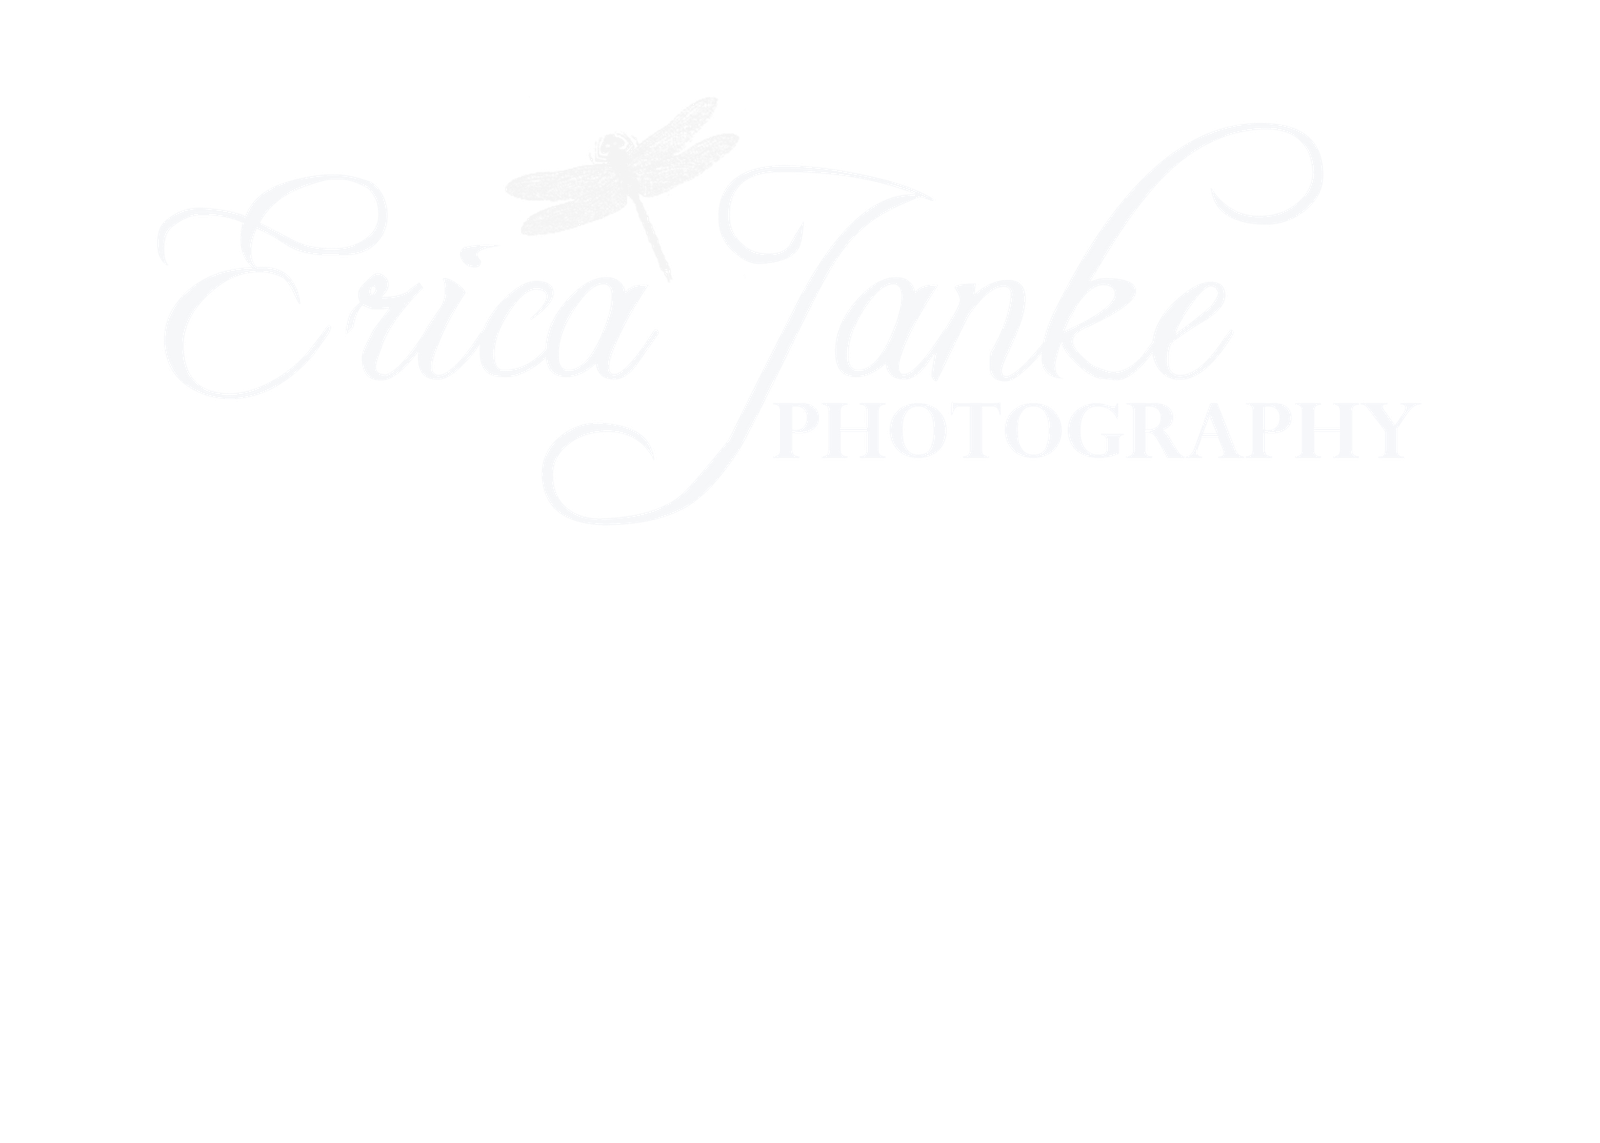 Erica Janke Photography